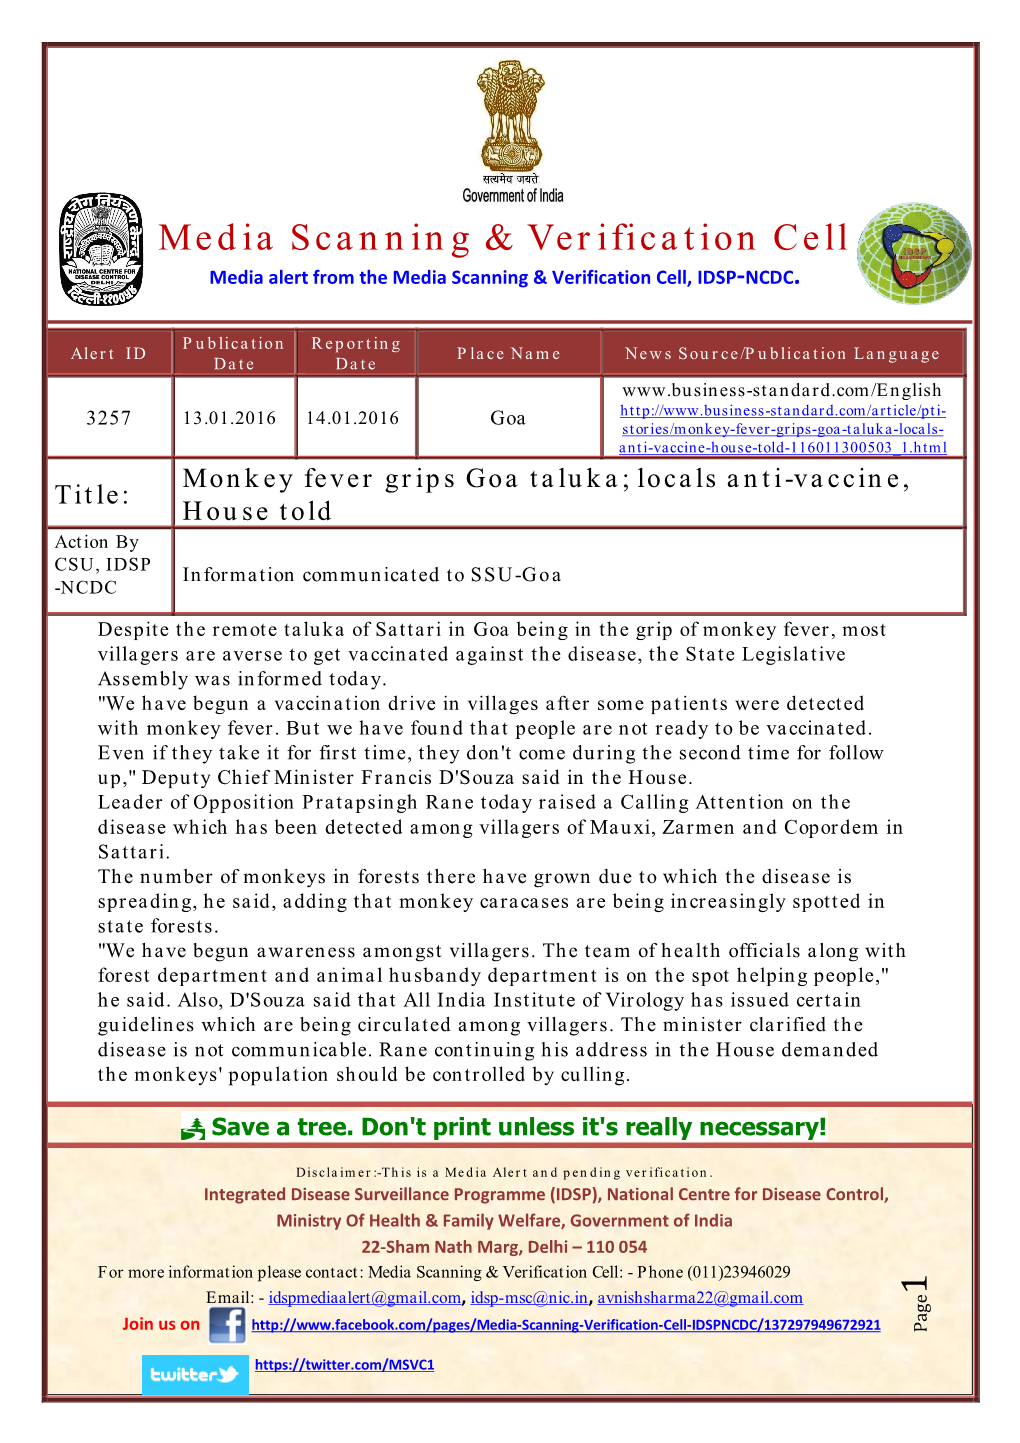 3257, Alert-Monkey Fever Grips Goa Taluka Locals Anti-Vaccine